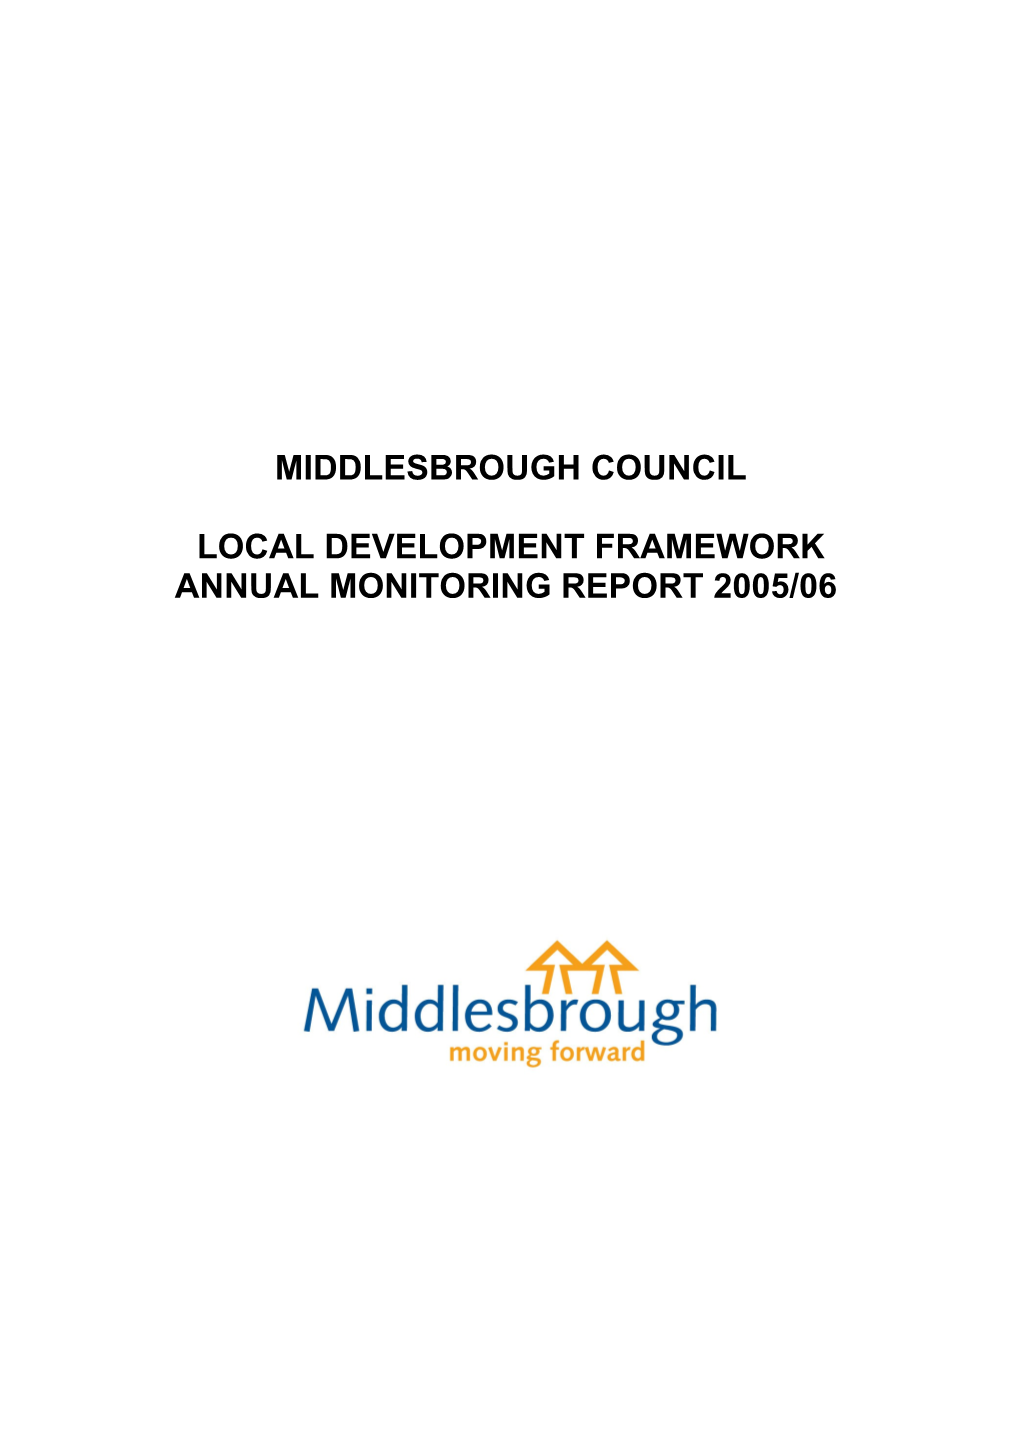 Local Development Framework Annual Monitoring Report 2005/06